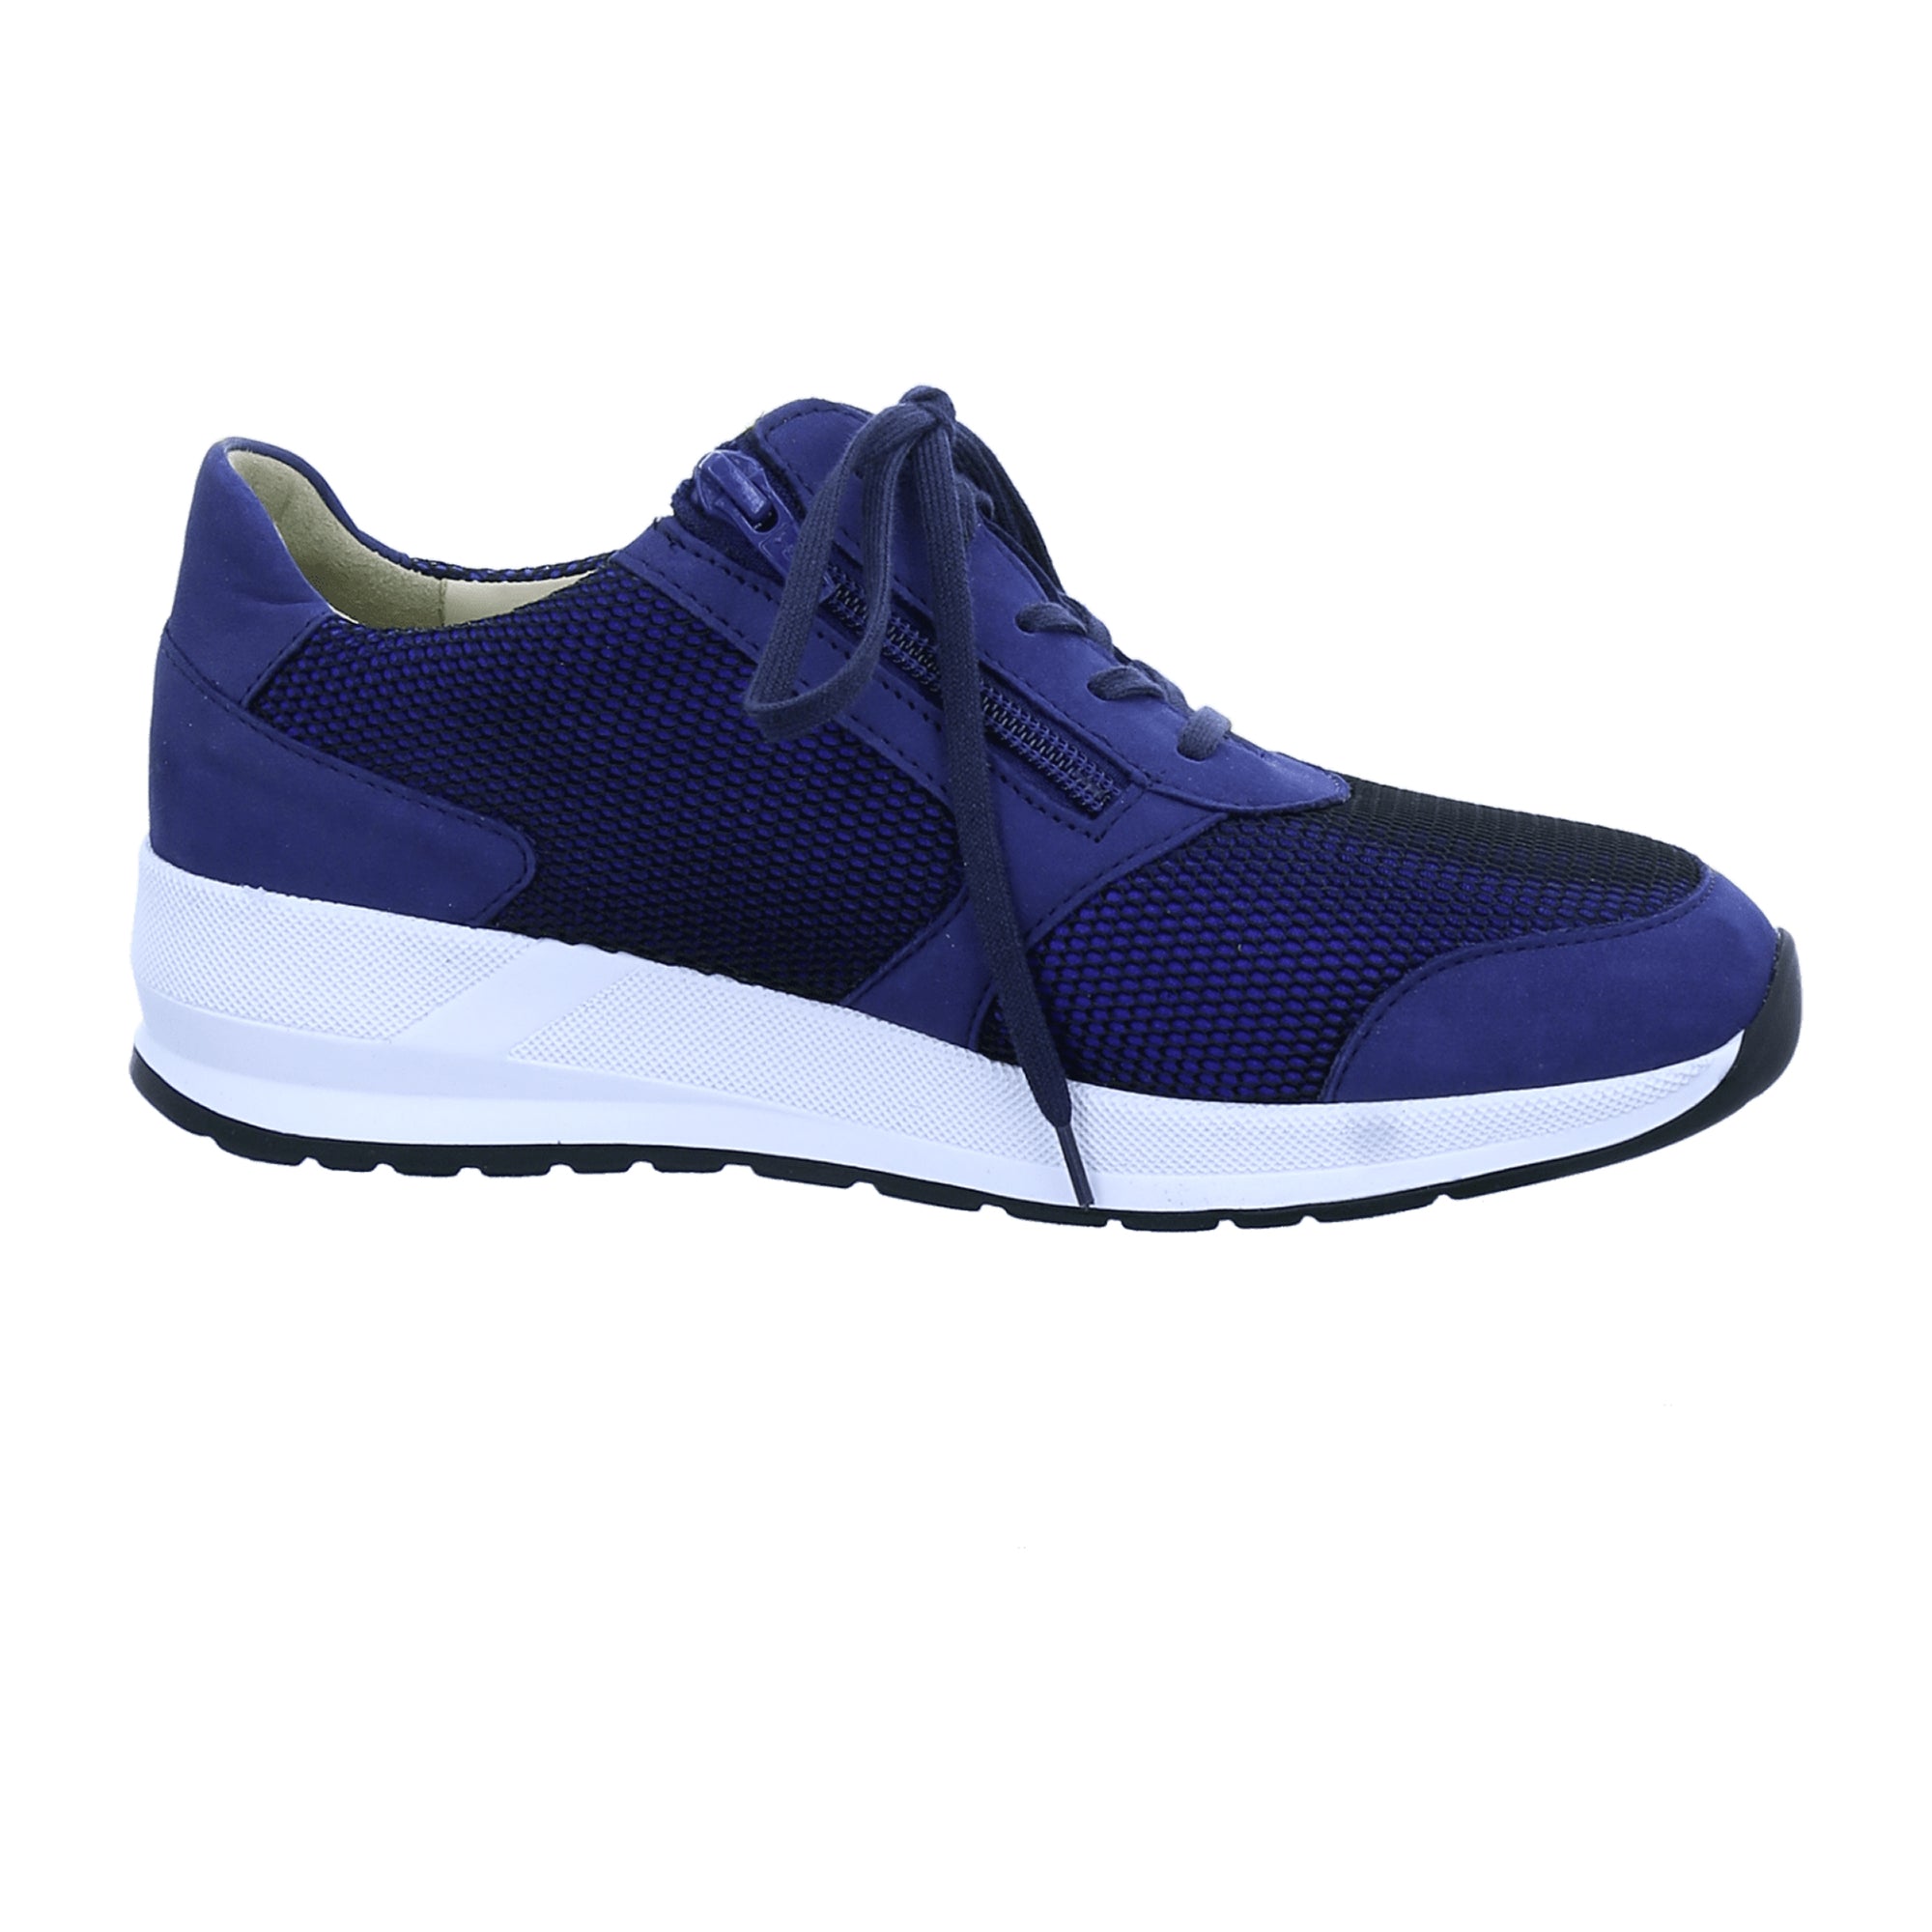 Finn Comfort Women's Comfortable Walking Shoes - Stylish Blue 5067-902557